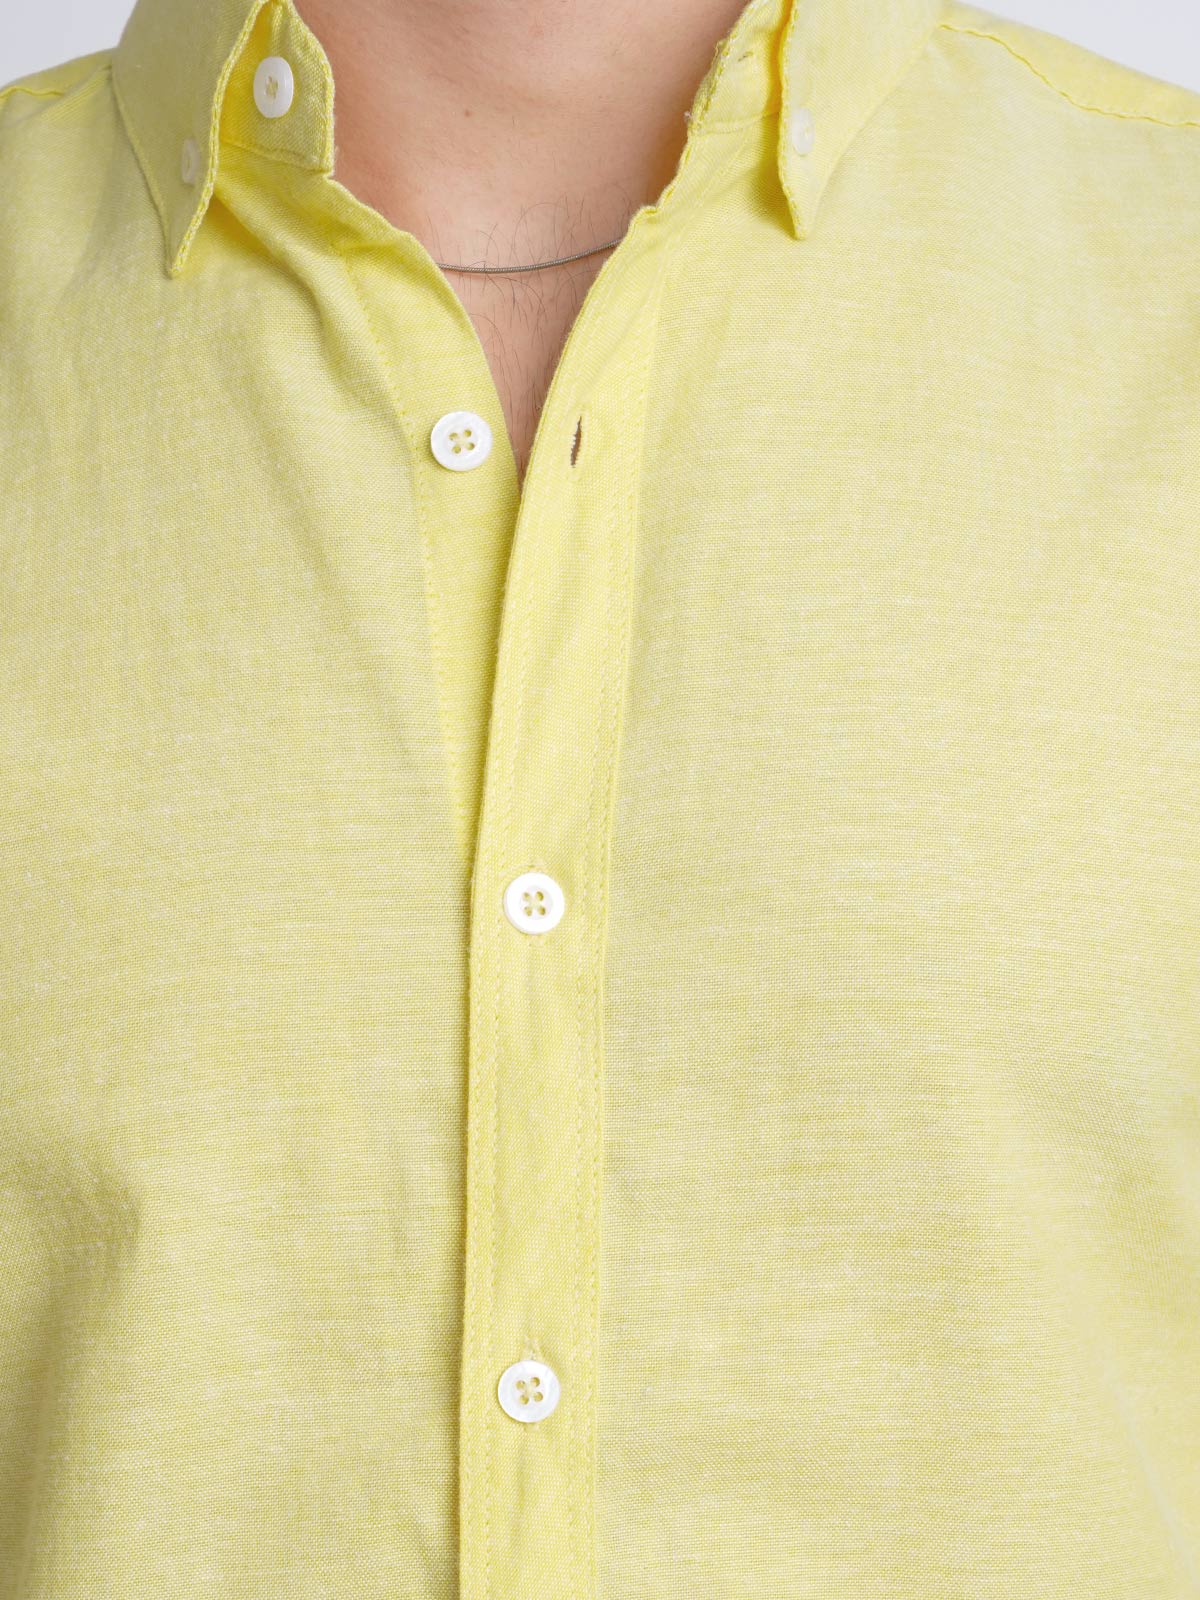 Yellow Plain Button Down Casual Shirt (CSB-141)